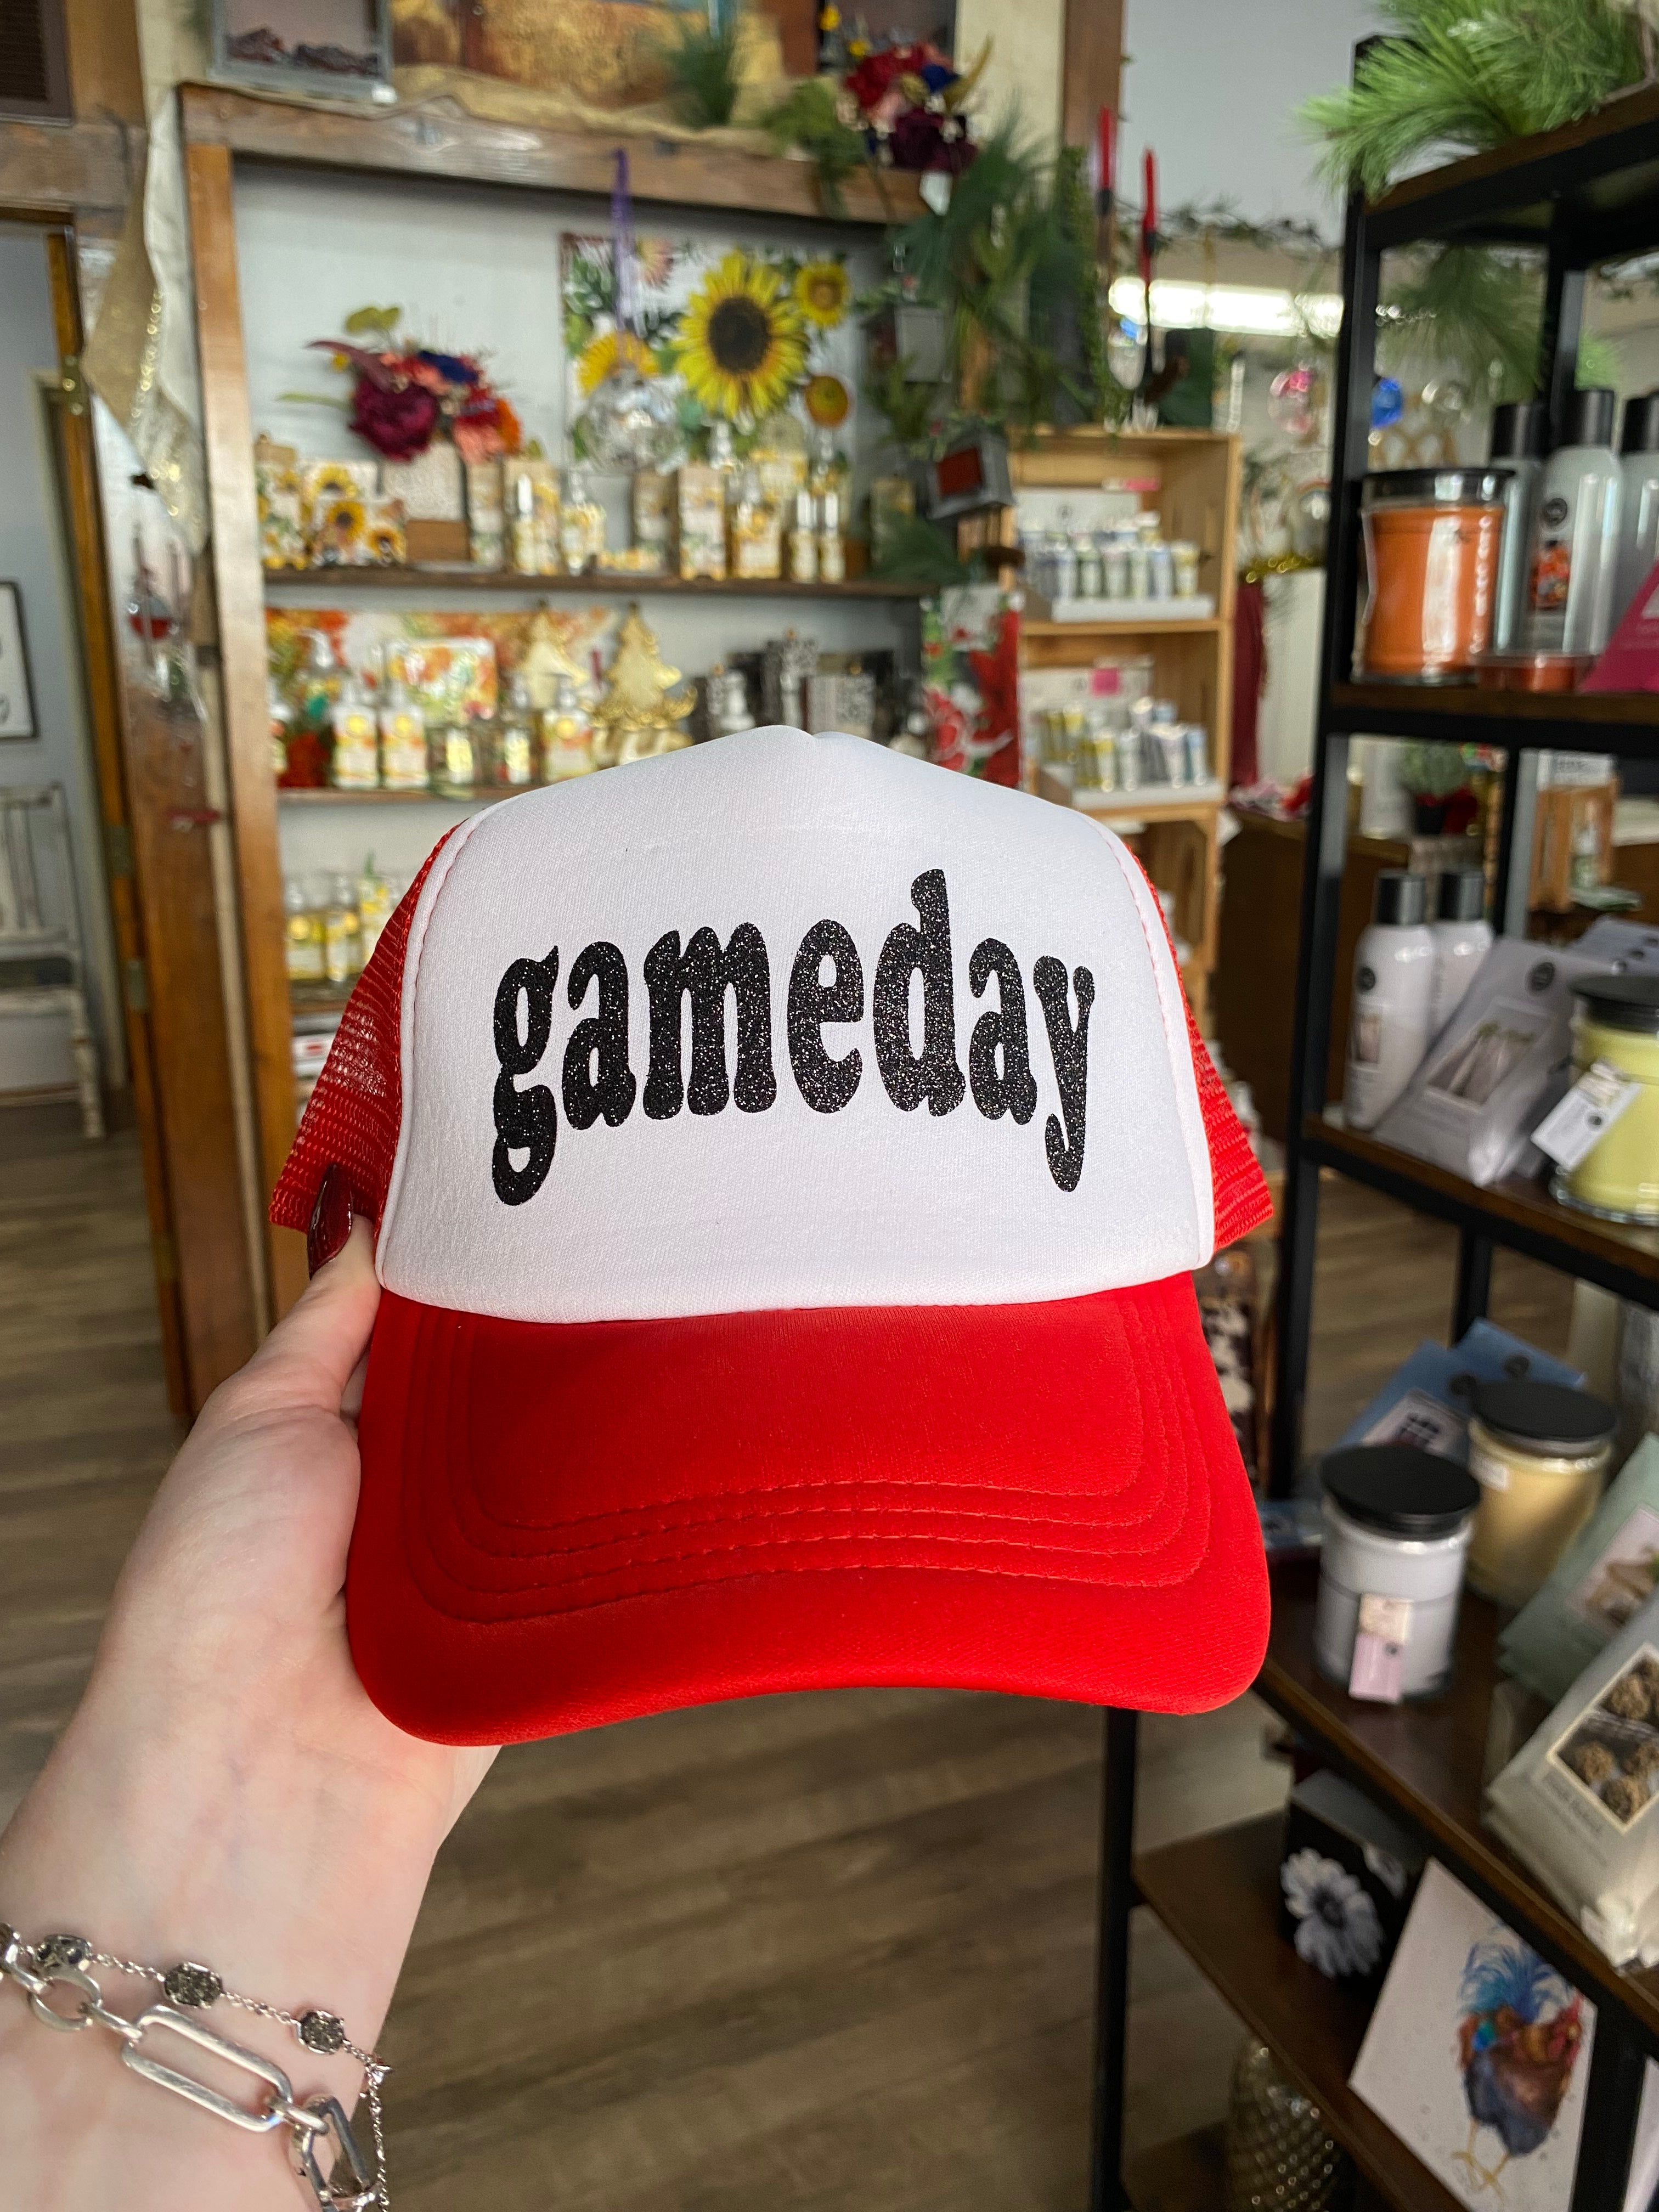 Gameday Trucker Hat